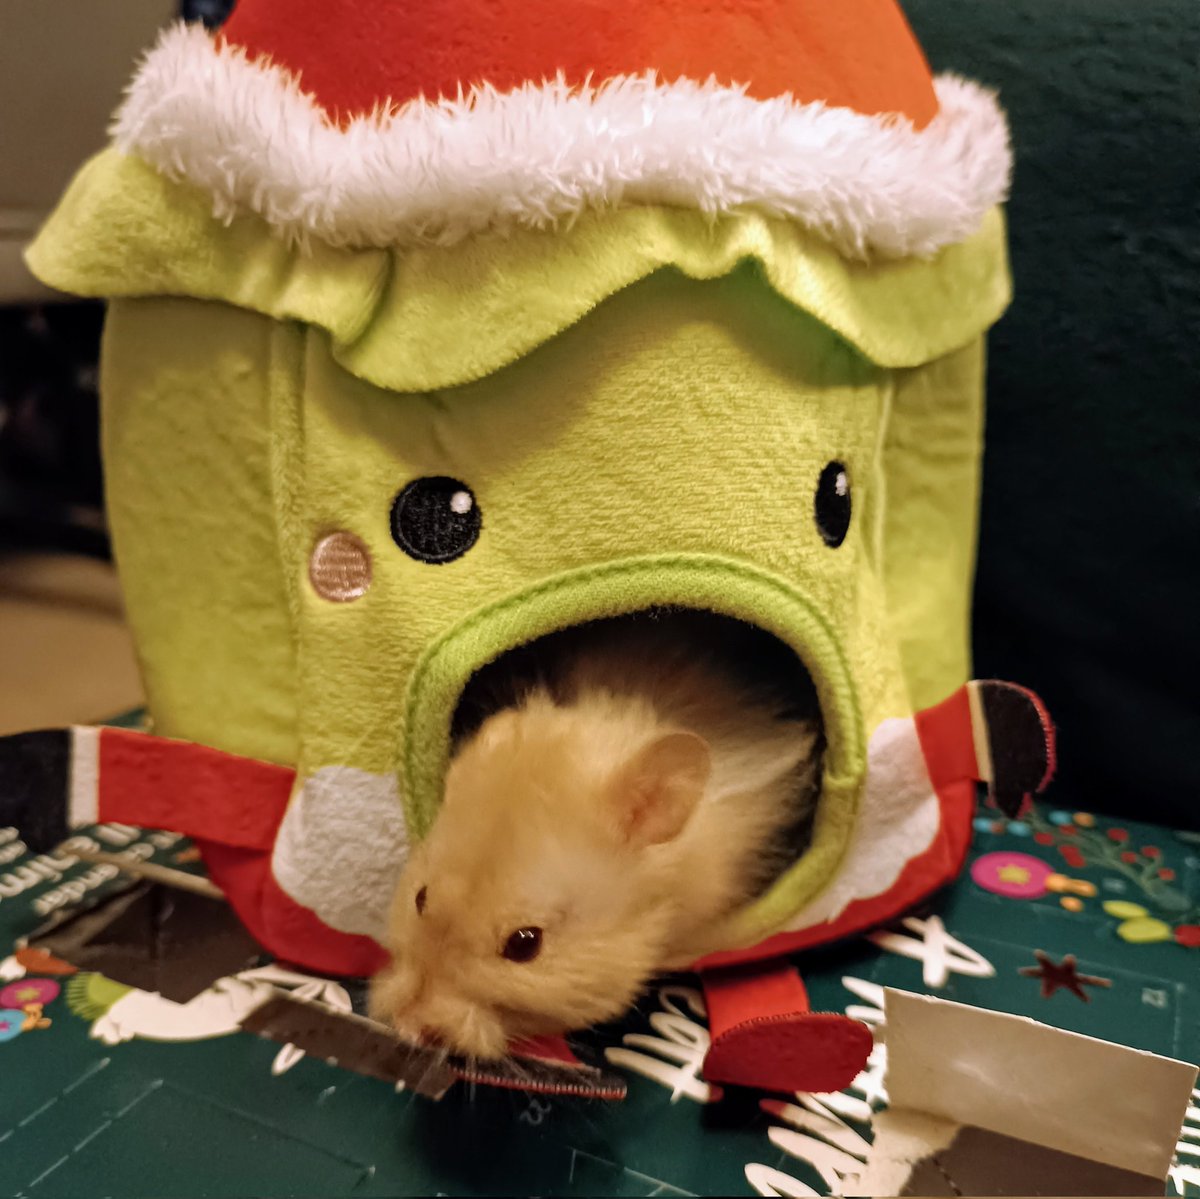 Nimbus investigating his advent calendar earlier this month. Hamsters get popcorn!

#nimbusthehamster #nimbus #hamster #hamsters #hamstersofinstagram #hamsterlife #pets #petsofinstagram #syrianhamster #christmashamster #adventcalendar #festive #festivehamster